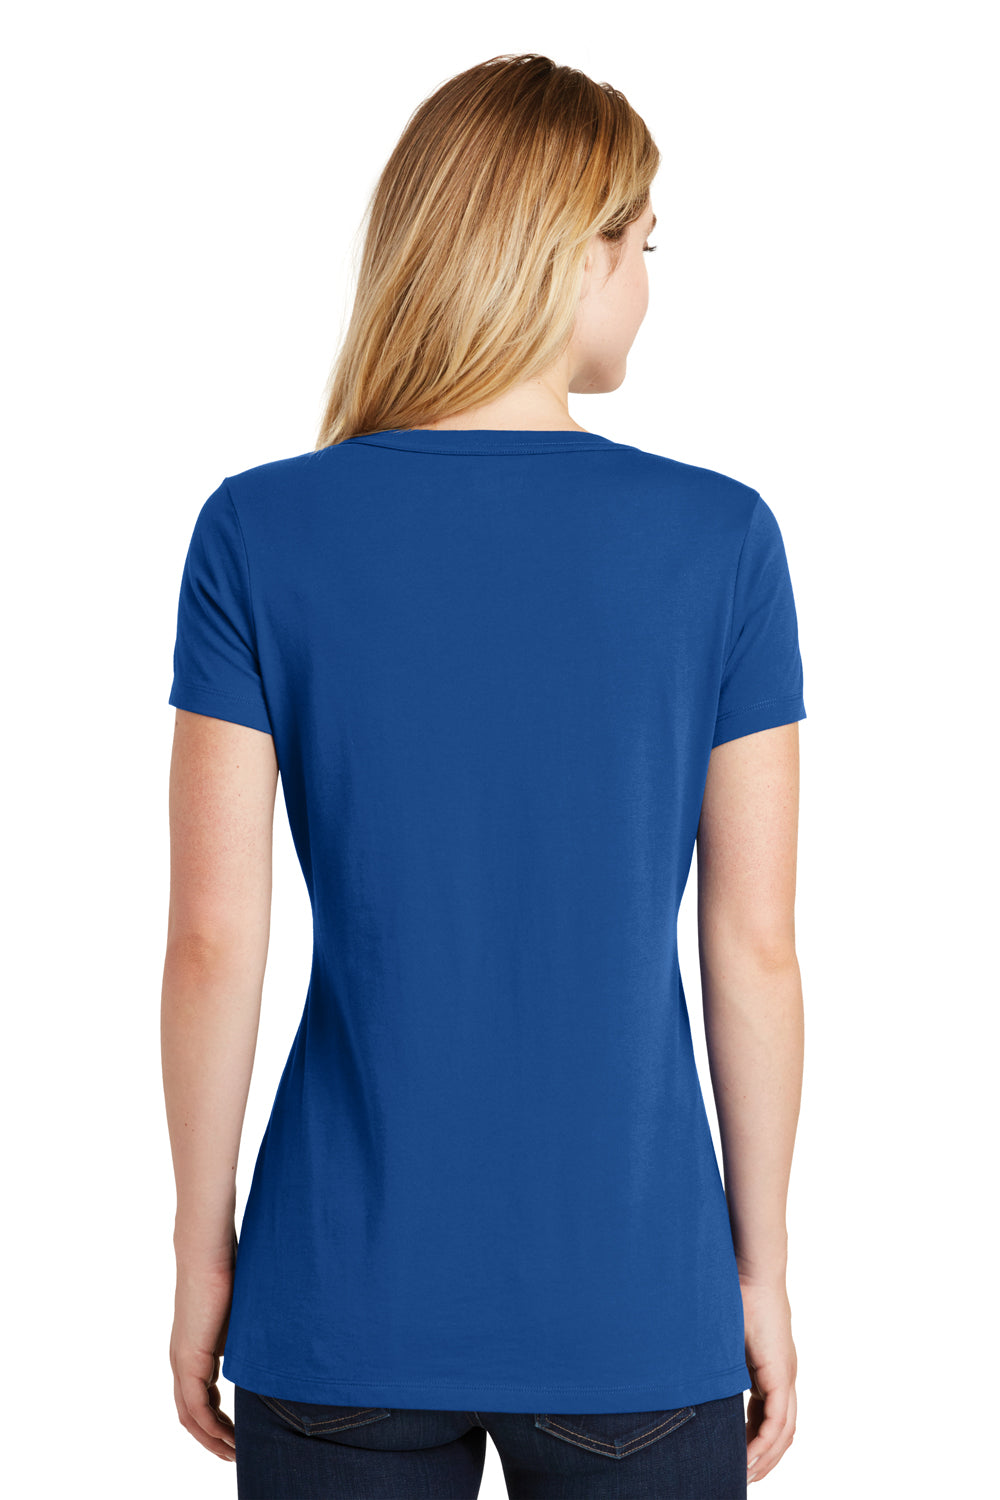 New Era LNEA101 Womens Heritage Short Sleeve V-Neck T-Shirt Royal Blue Back